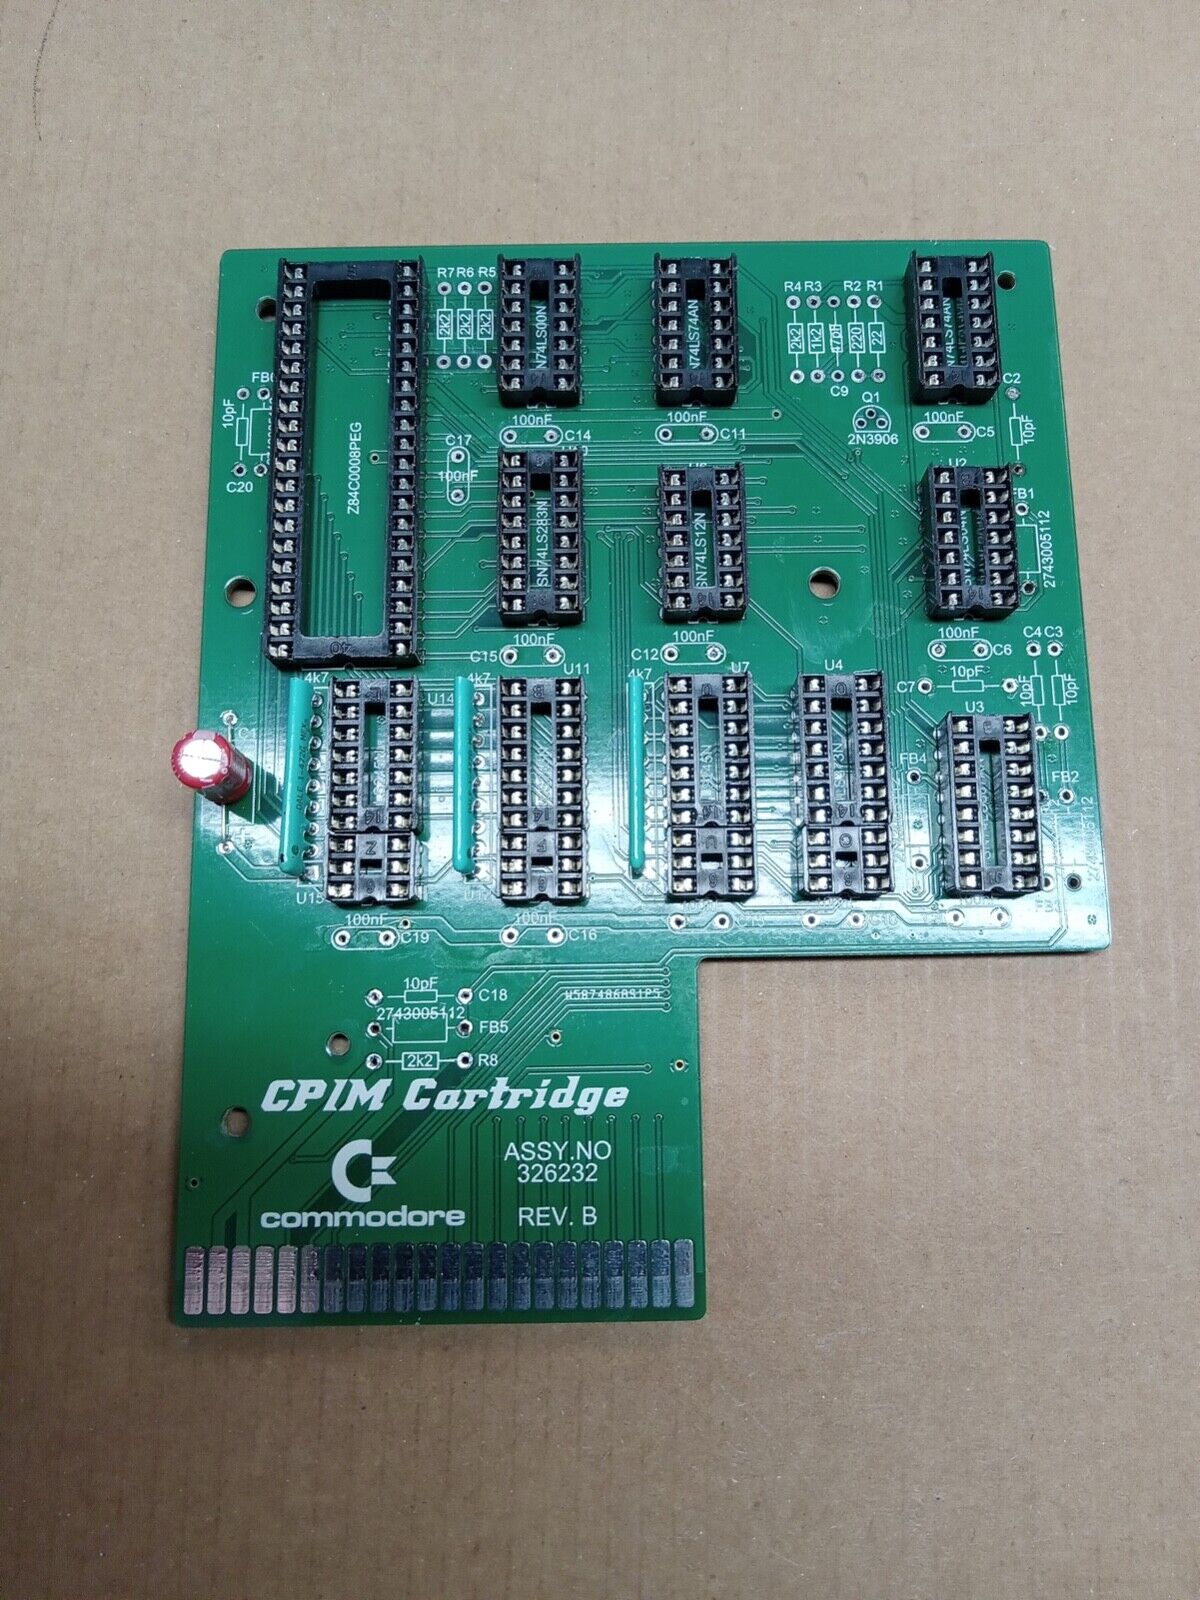 Commodore CP/M Cartridge for C64 (replica of the  CP/M CART) BARE PCB (LAST ONE)